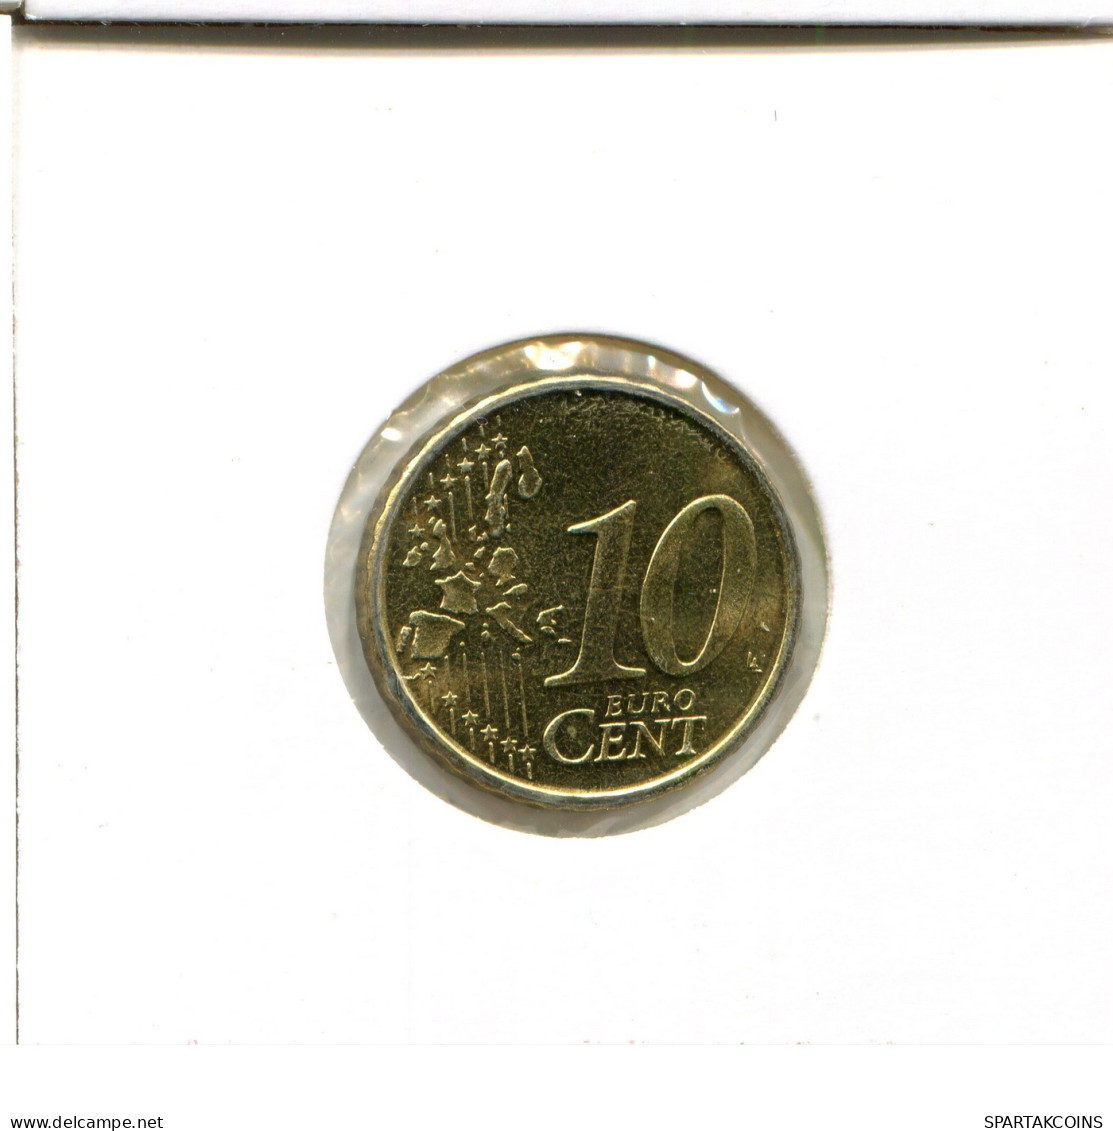 10 EURO CENTS 2002 SPAIN Coin #EU554.U.A - Spanje